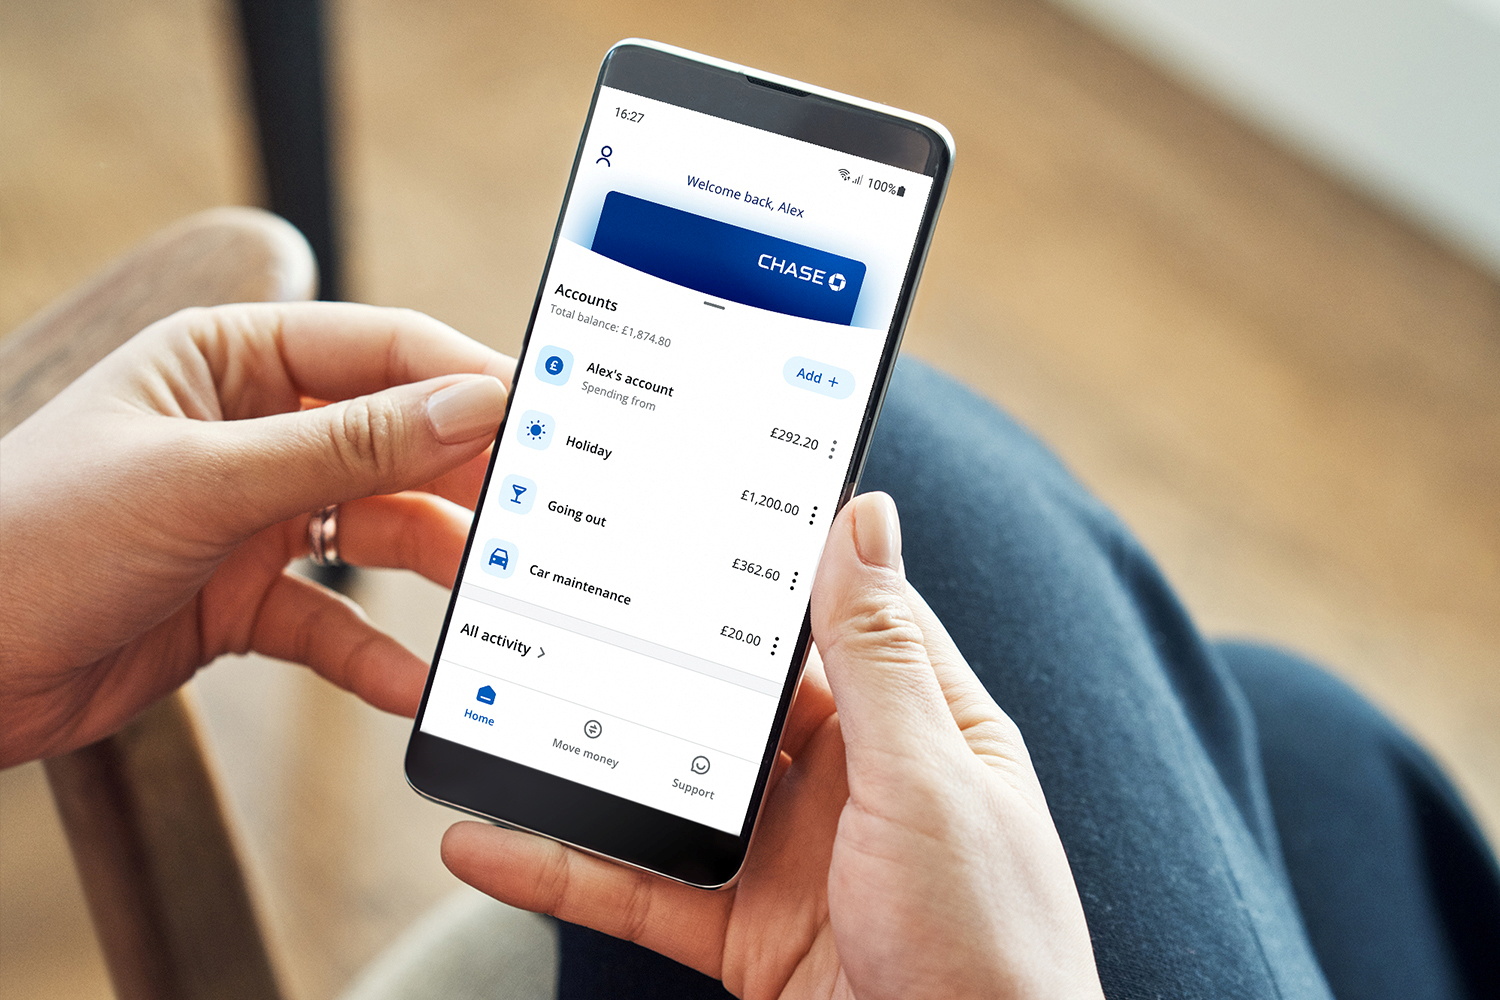 Chase's digital banking app